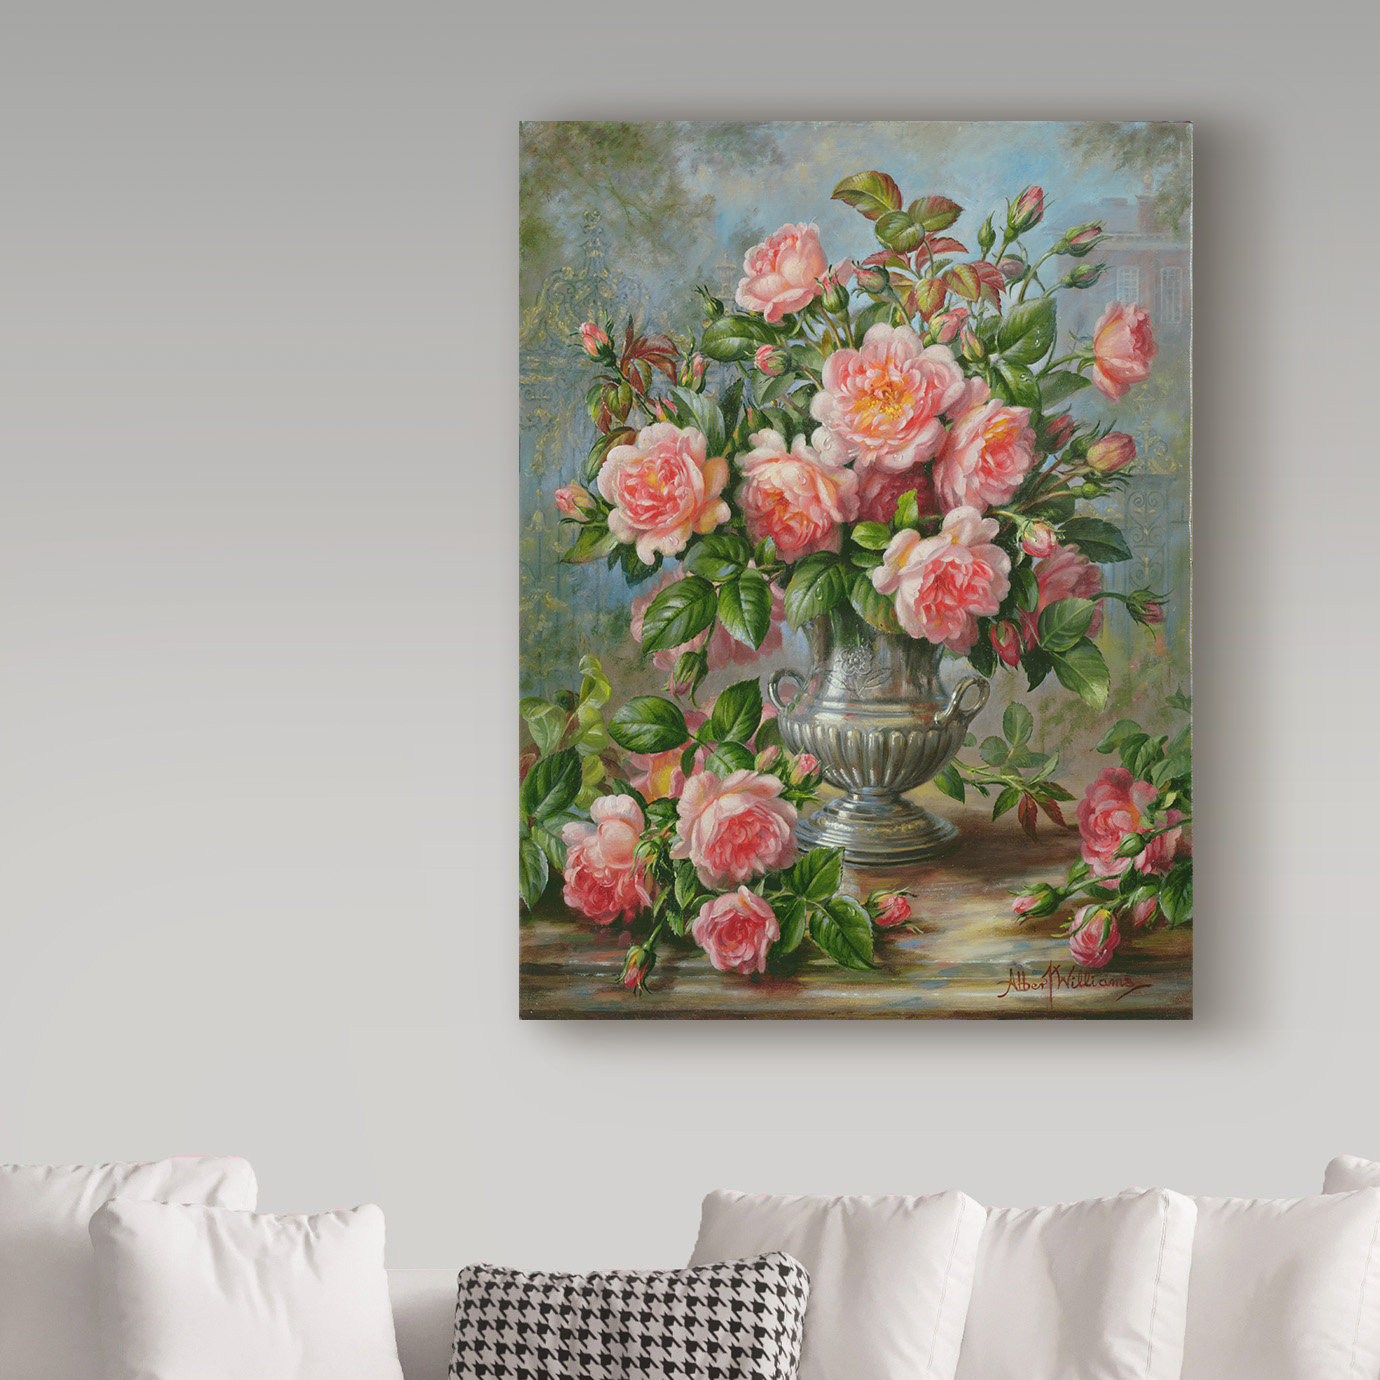 Trademark Art Albert Williams English Elegance Roses In A Silver Vase Graphic Art On Canvas Wayfair